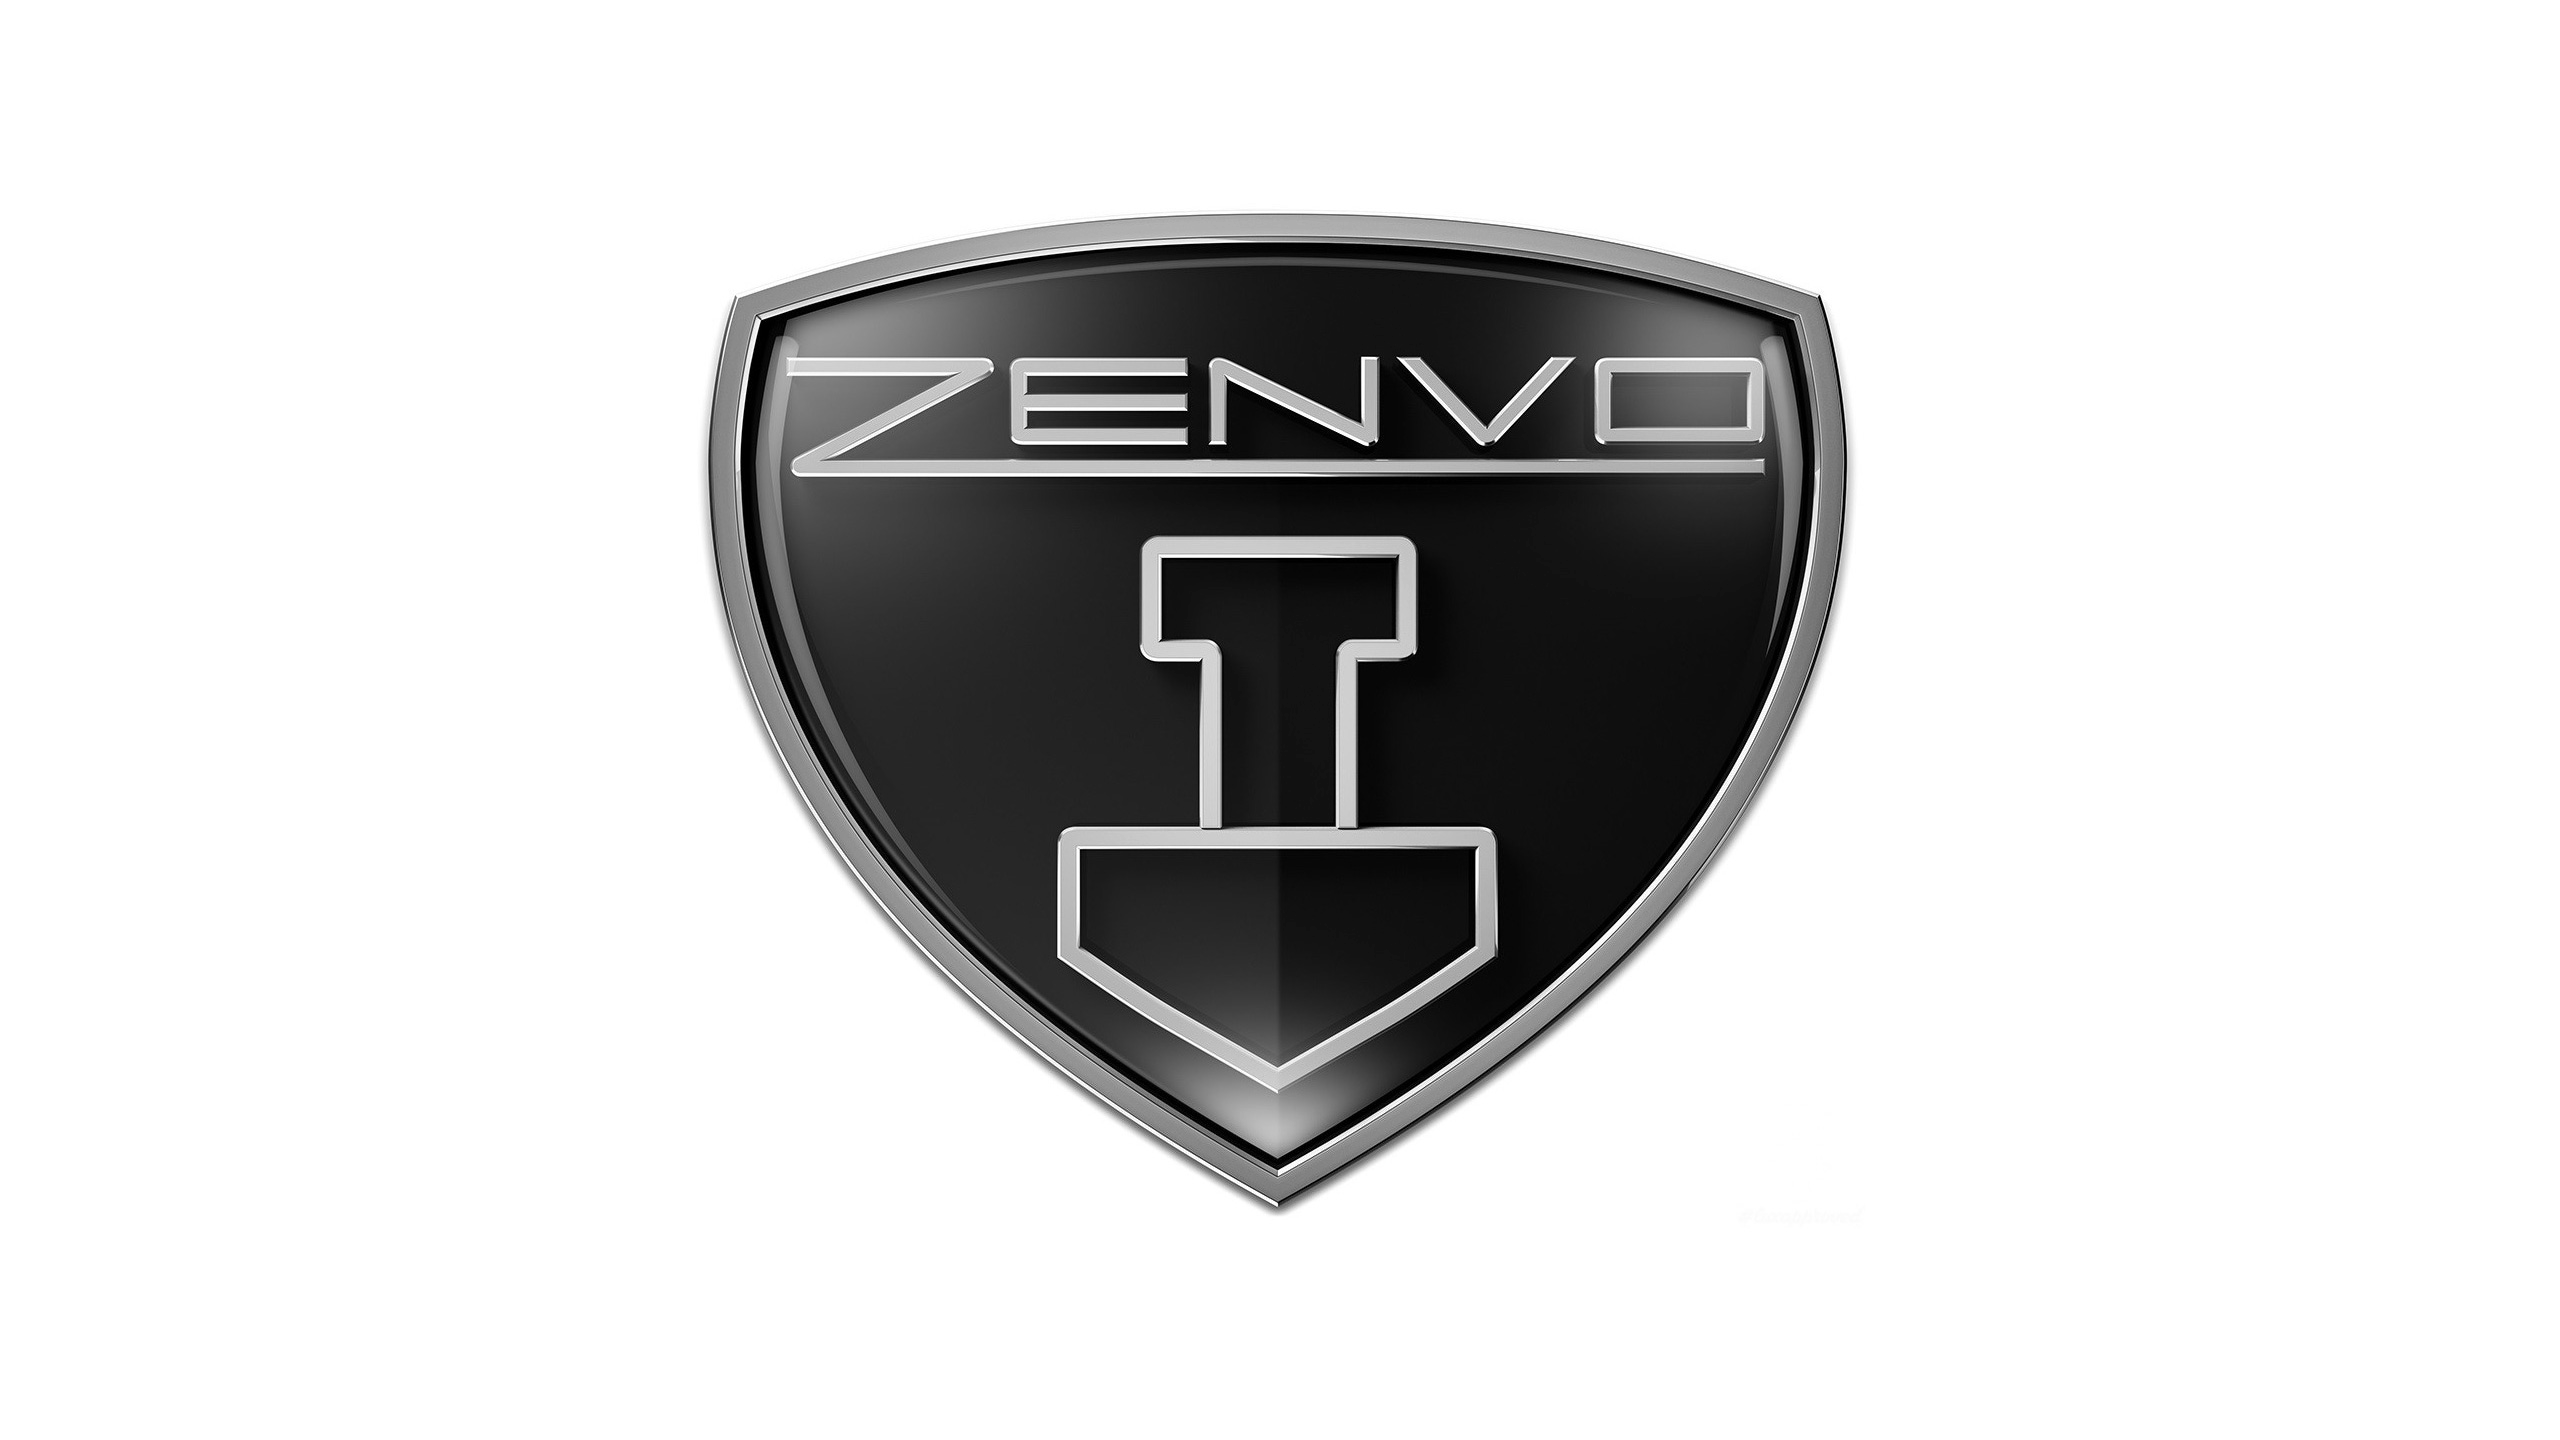 Zenvo Logo - Zenvo Logo, Information | Carlogos.org